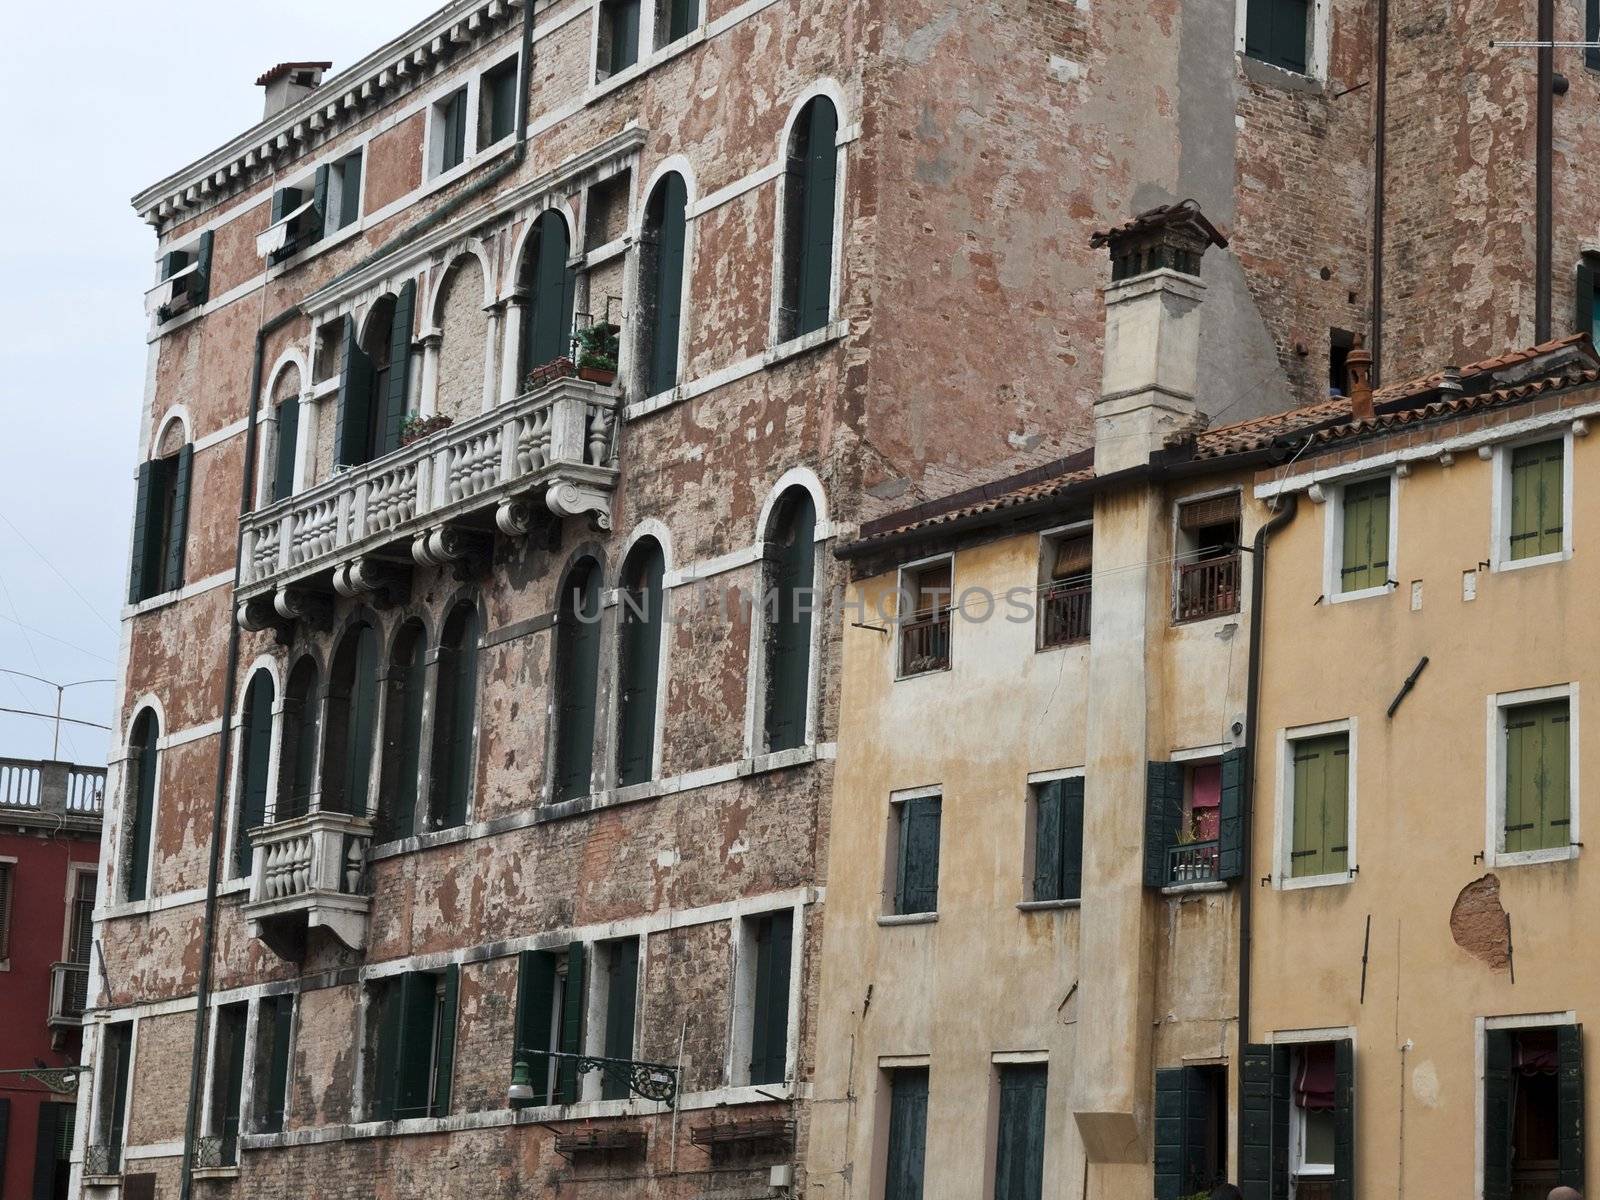 Venice - Buildings along the venetian canal